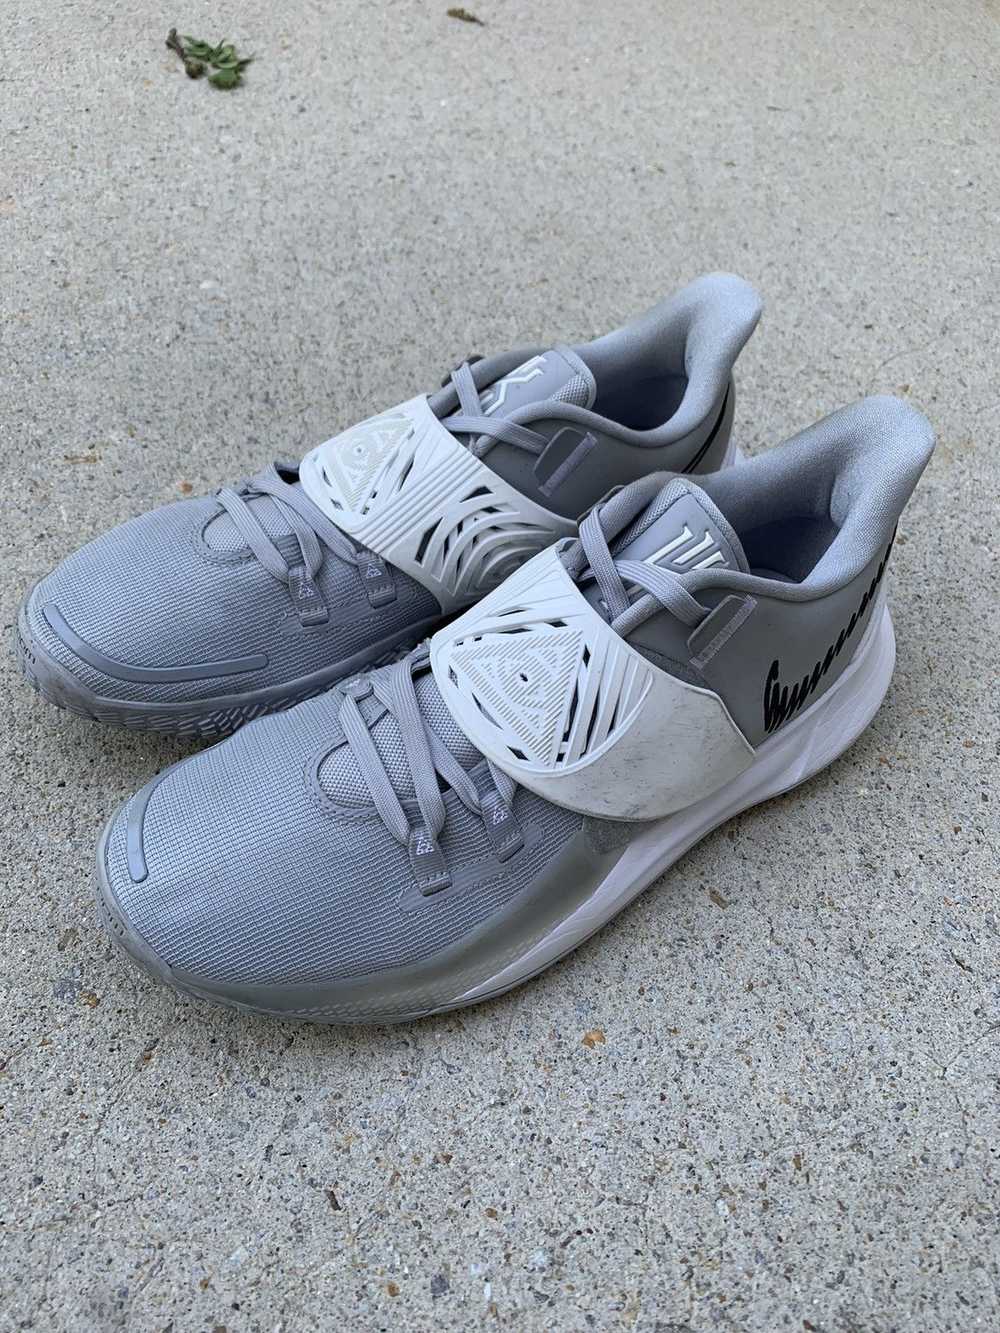 Nike Nike Kyrie Low 3 Flat Silver Black White - image 3